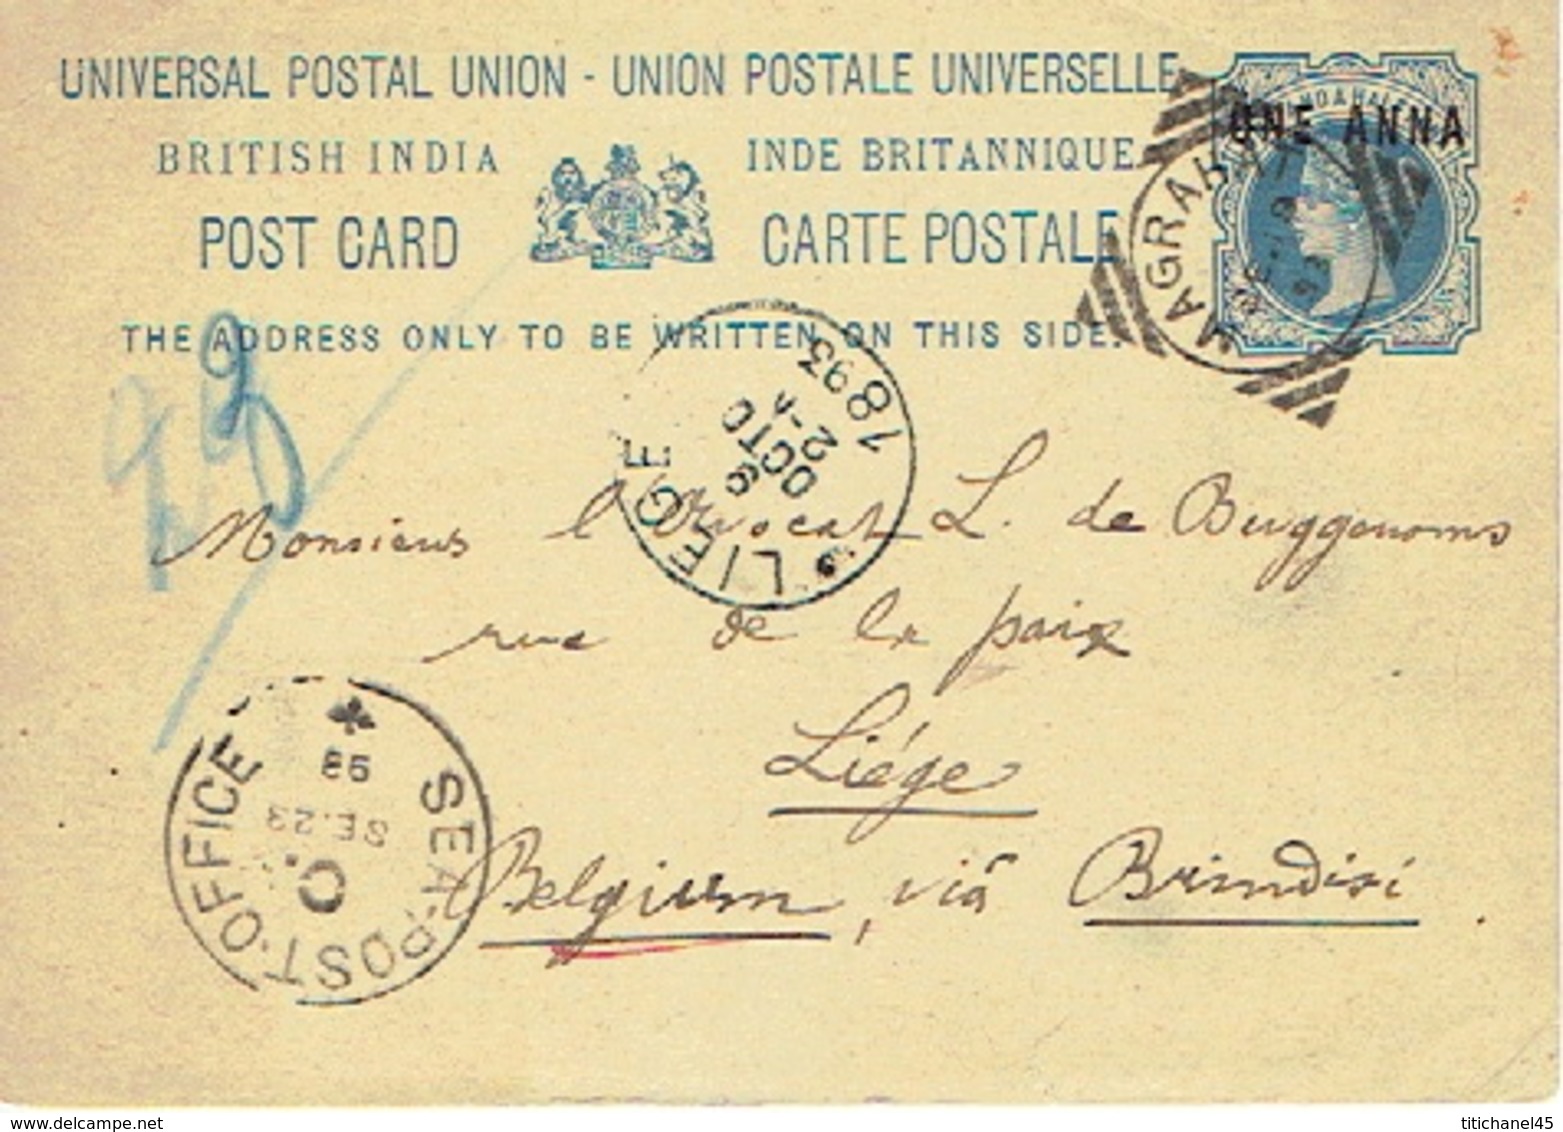 BRITISH INDIA - Entier Postal - MAGRAHAT 18 SEPT 1893 To LIEGE (BELGIUM) Via BRINDISI - SEA-POST-OFFICE - 1882-1901 Empire